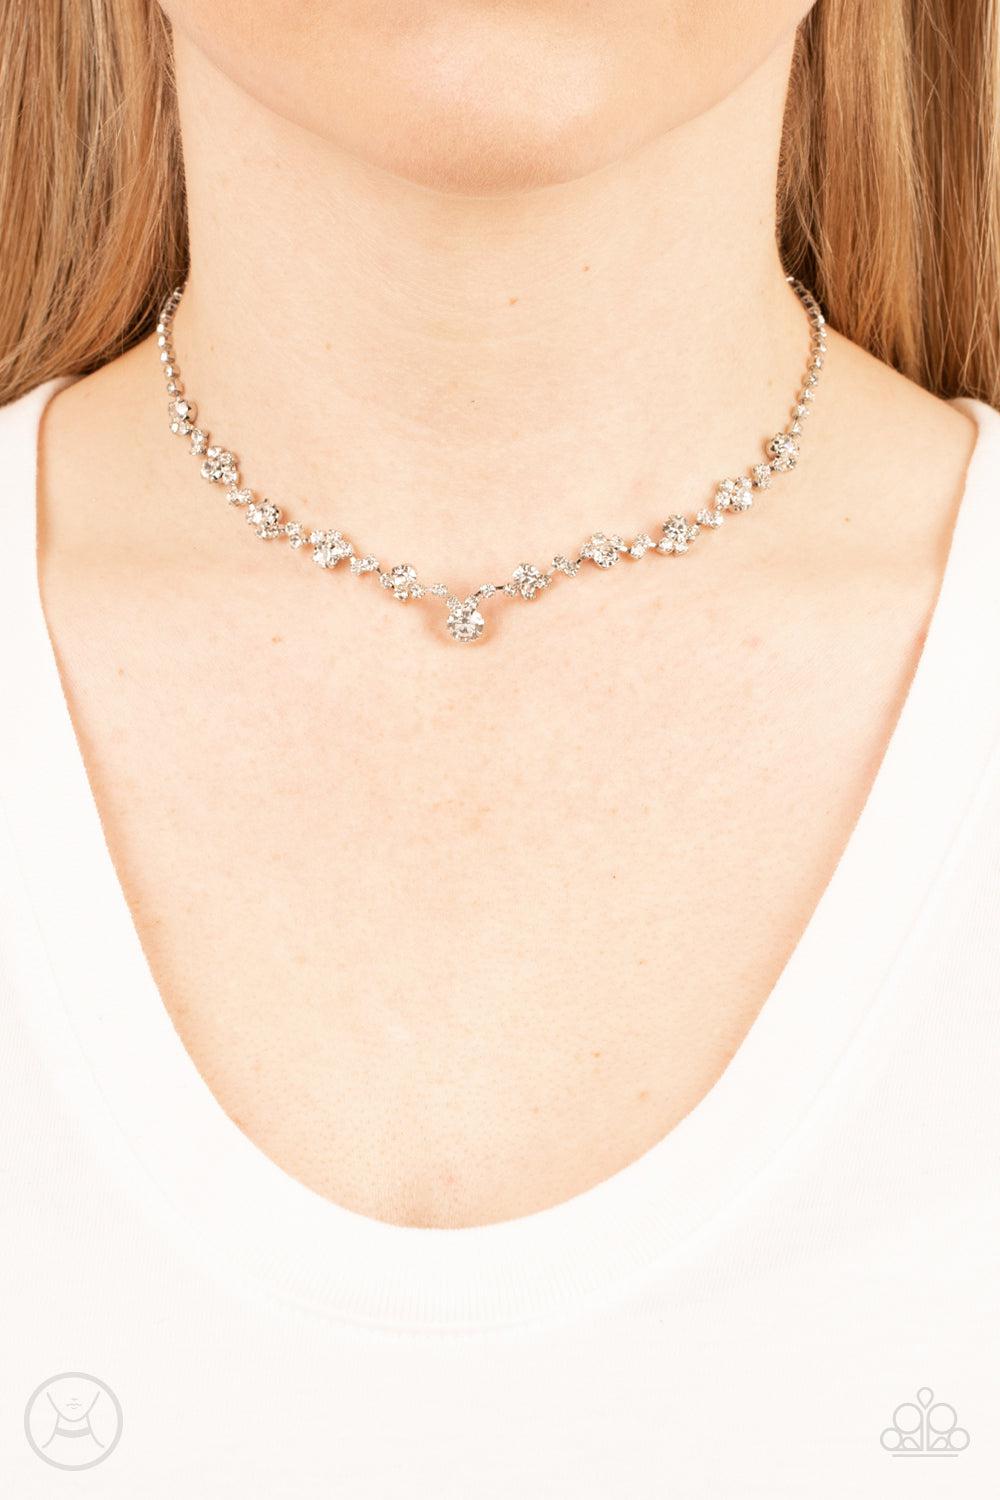 Regal Rebel White Rhinestone Choker Necklace - Paparazzi Accessories- lightbox - CarasShop.com - $5 Jewelry by Cara Jewels